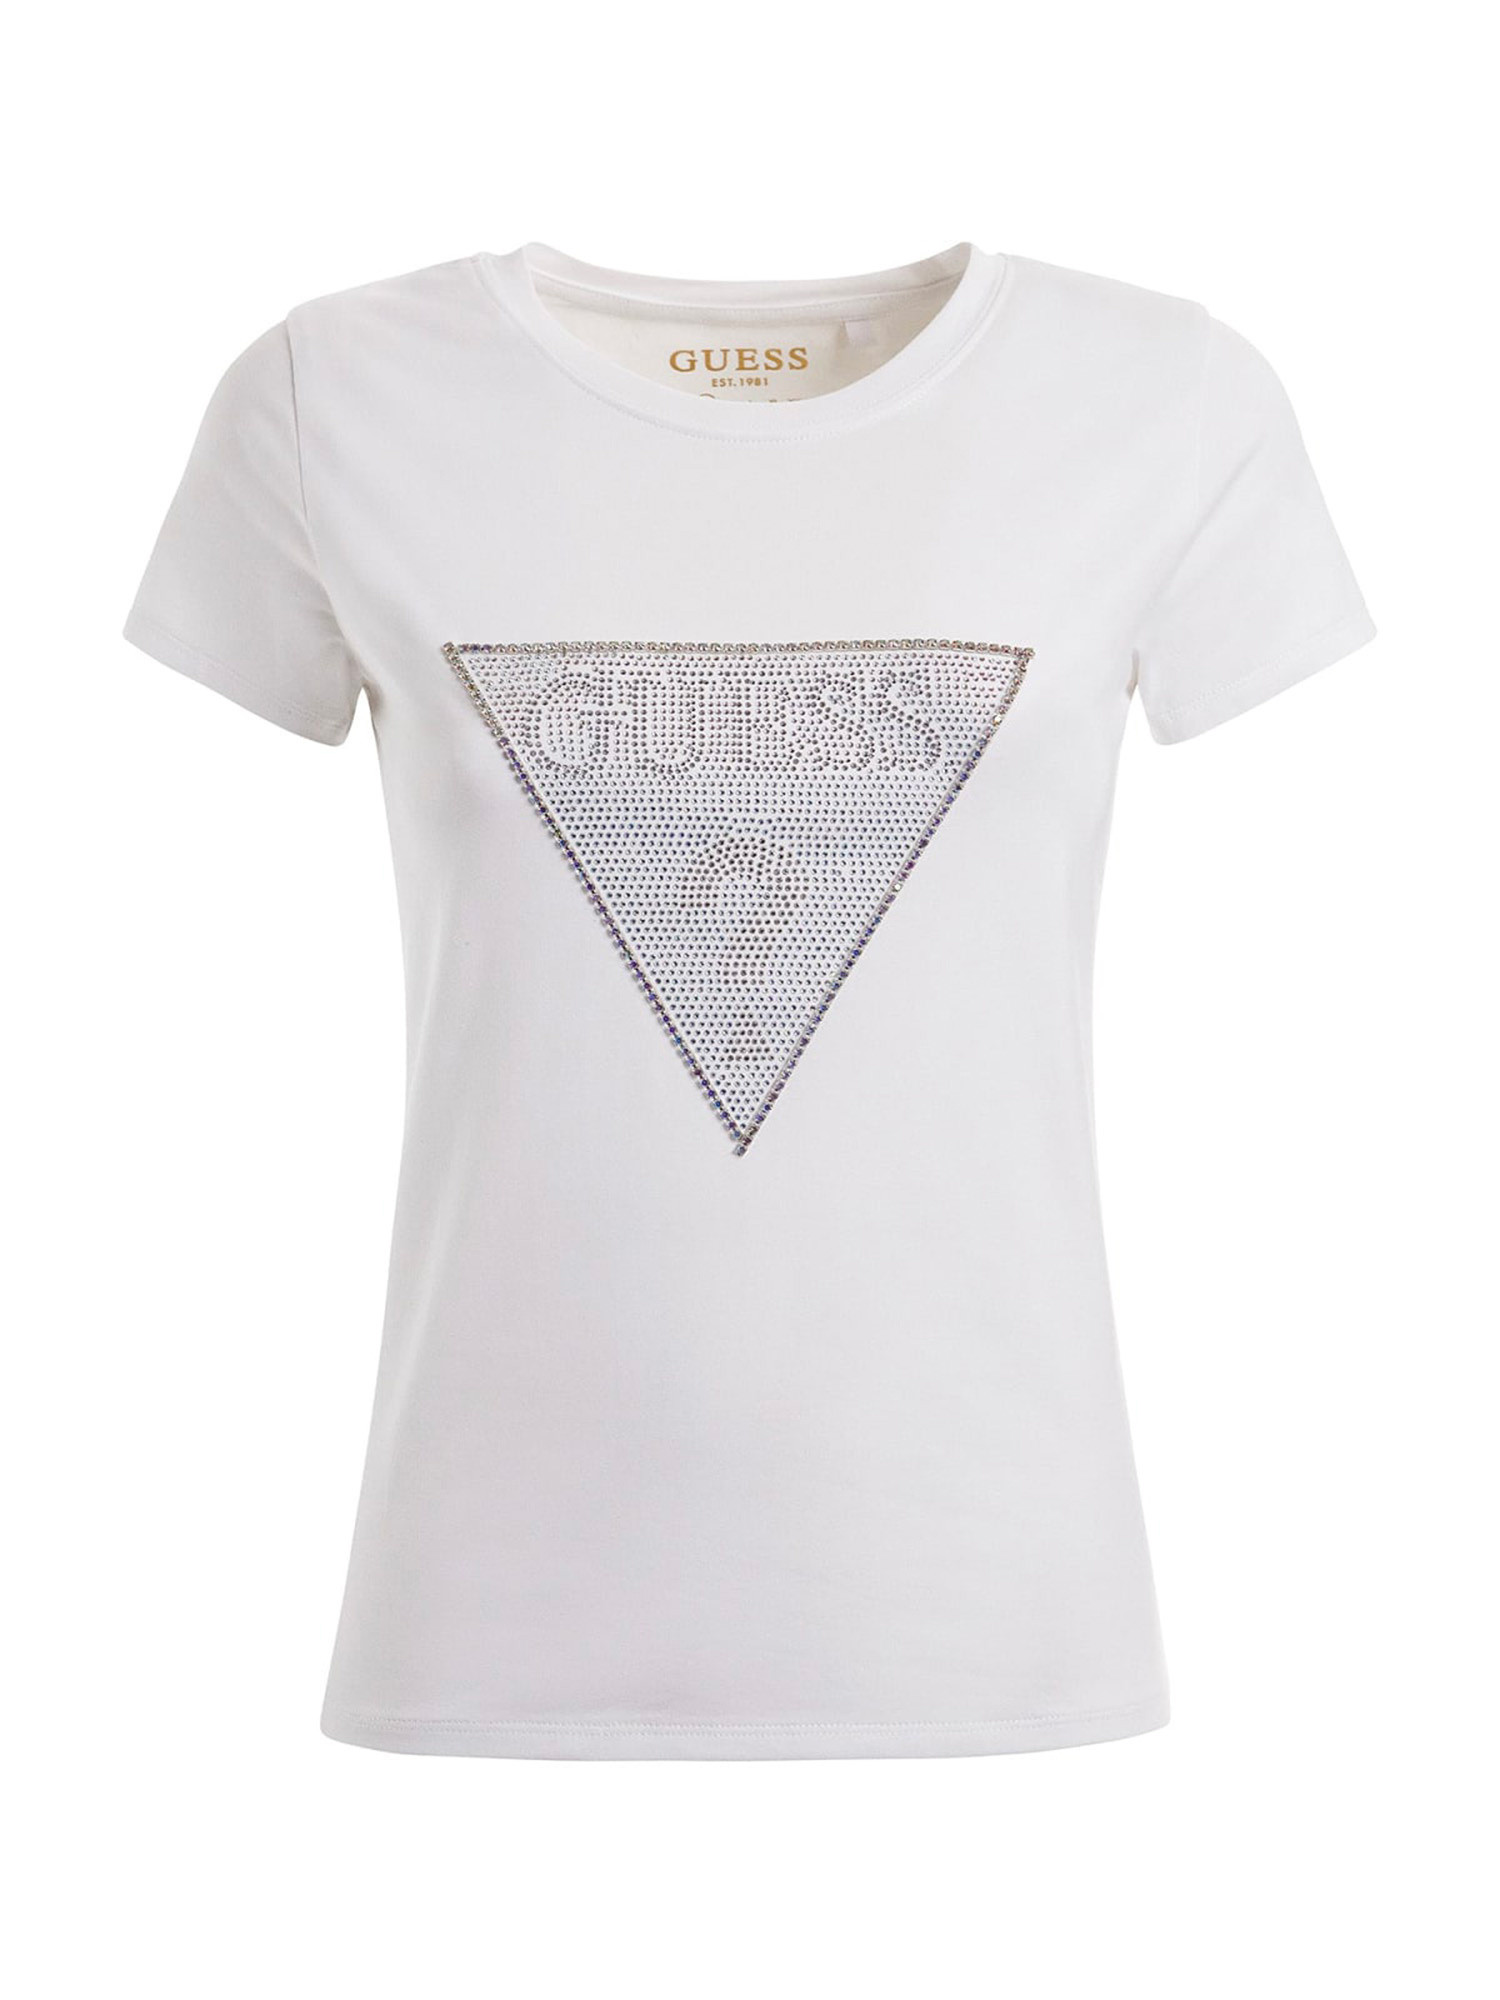 Guess - Slim fit rhinestone logo t-shirt, White, large image number 0